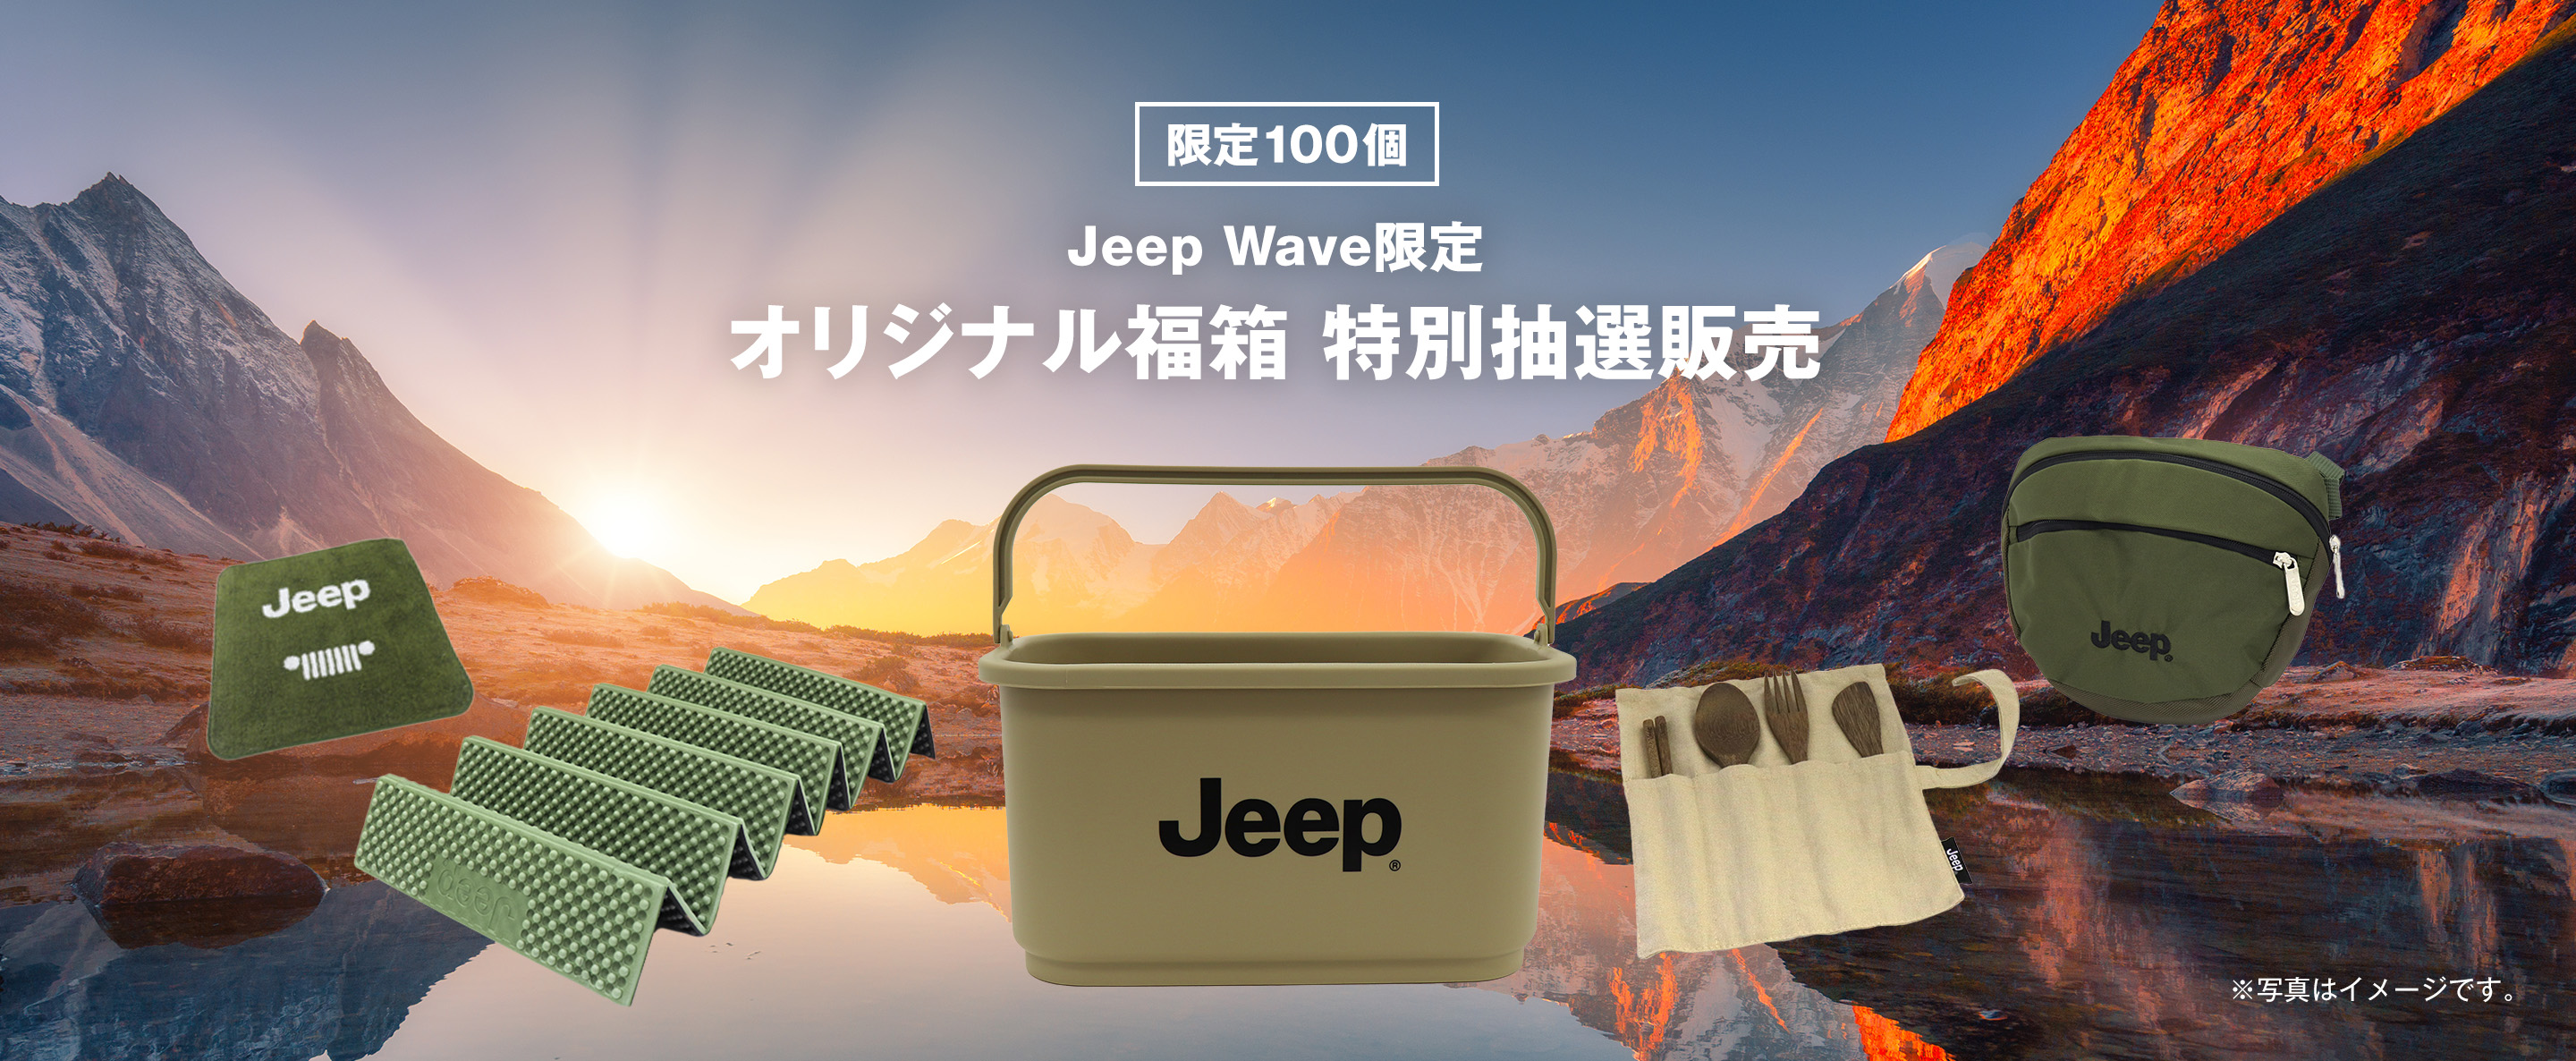 Jeep Wave限定 オリジナル福箱 特別抽選販売